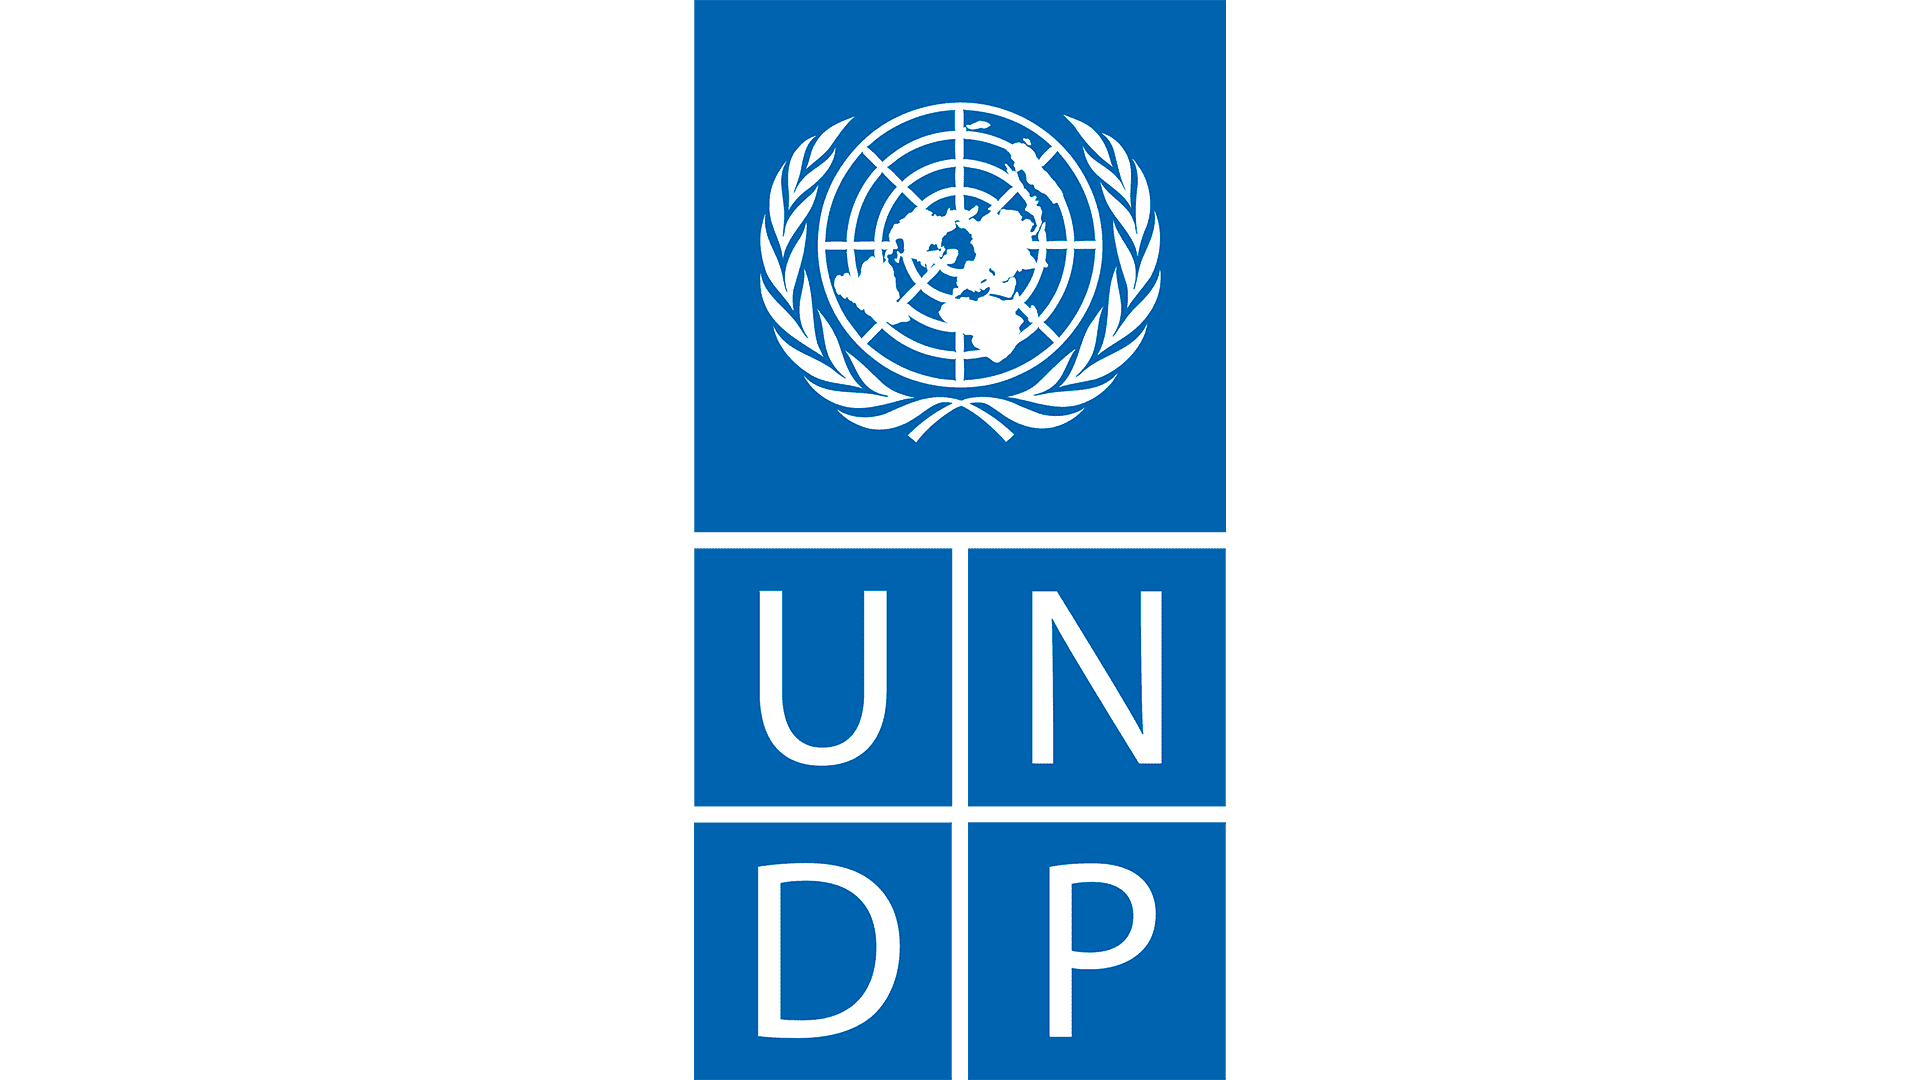 UNDP's logo